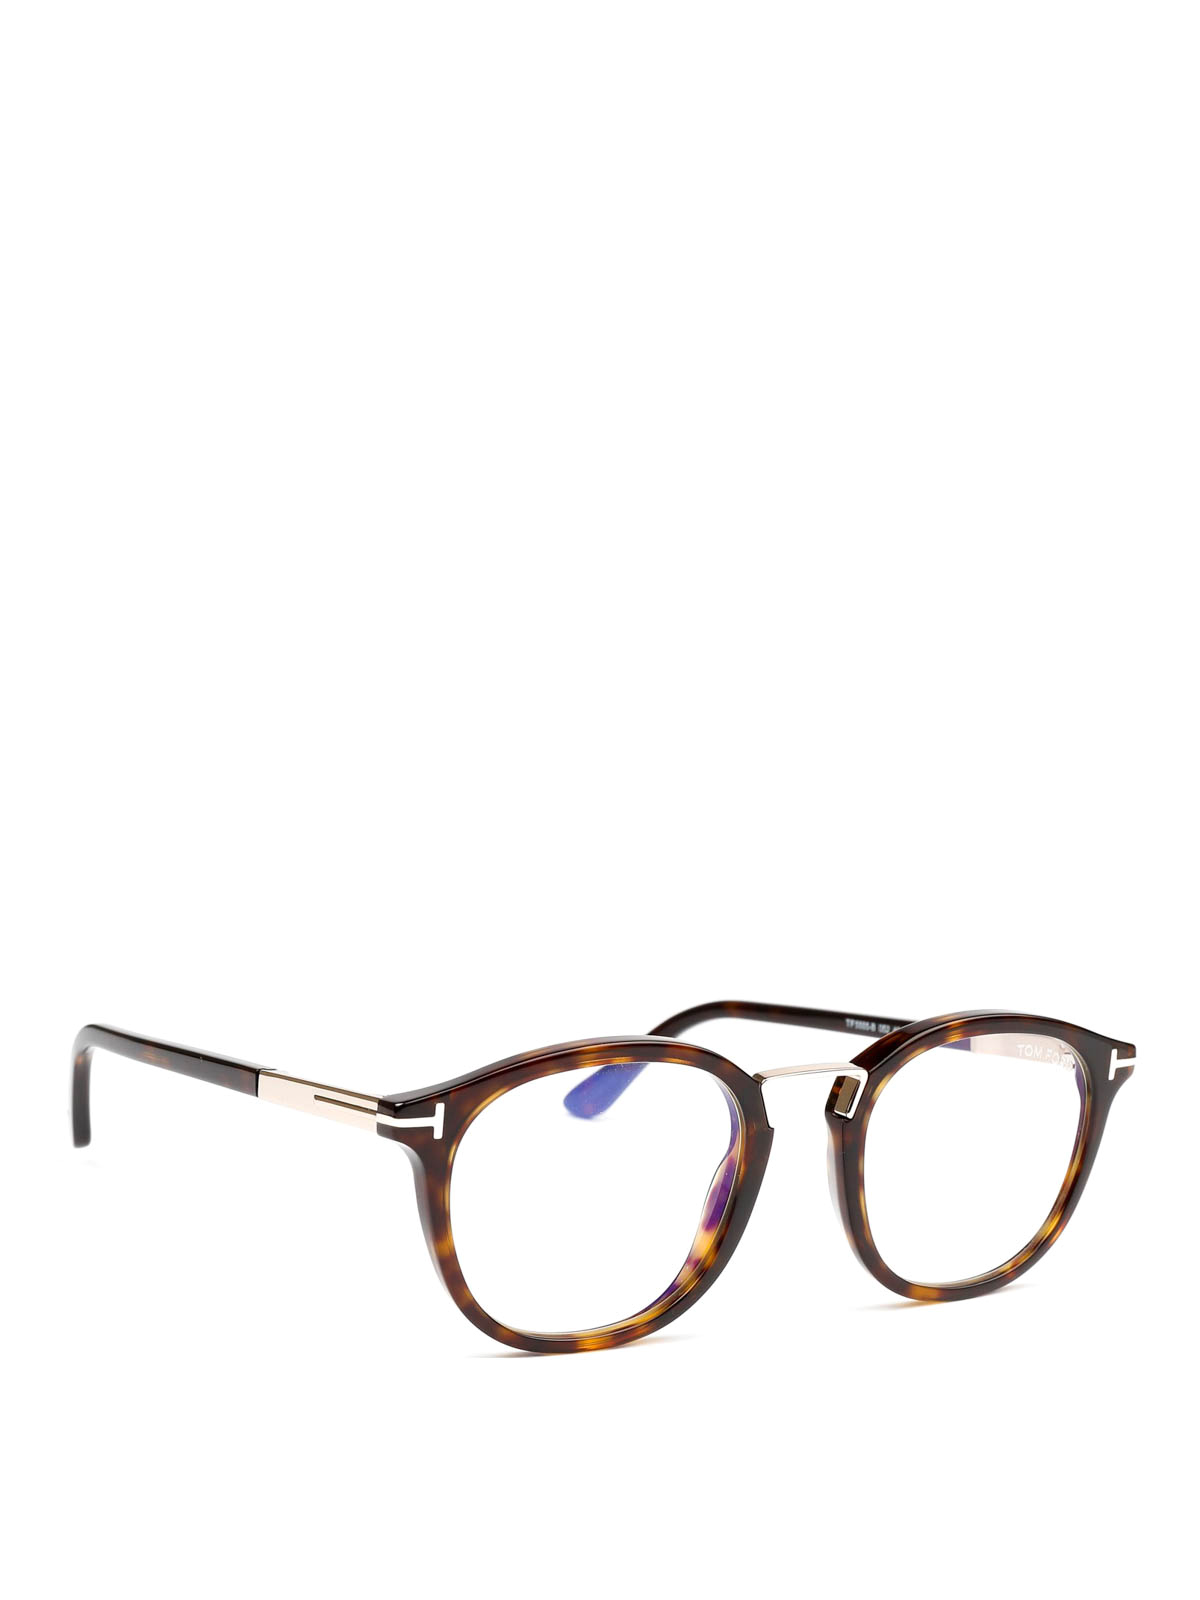 Glasses Tom Ford - Tortoise acetate and metal bridge eyeglasses ...